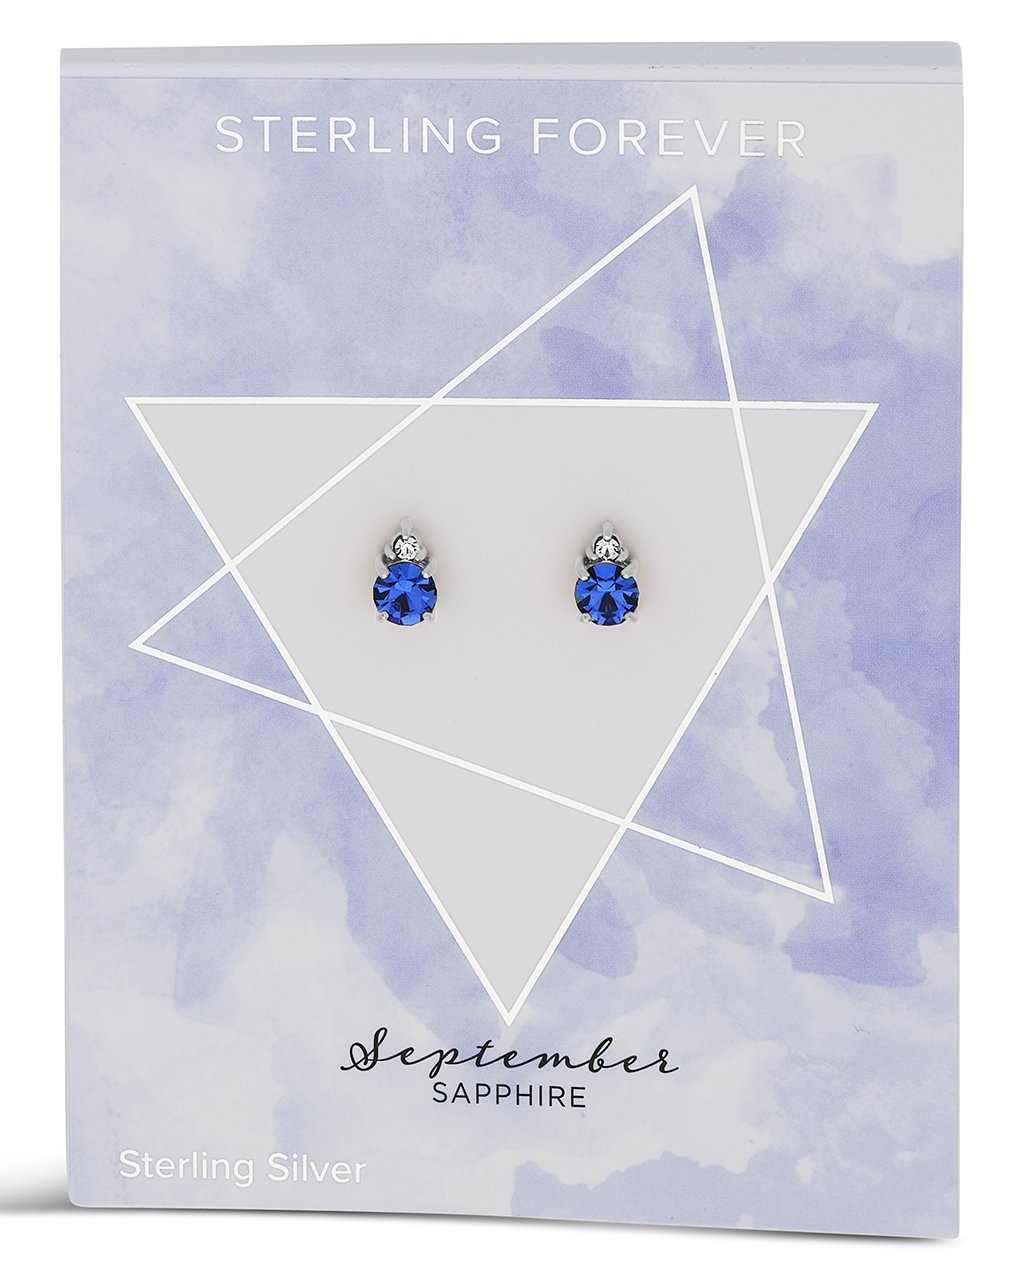 Sterling Silver Birthstone Studs Earring Sterling Forever 